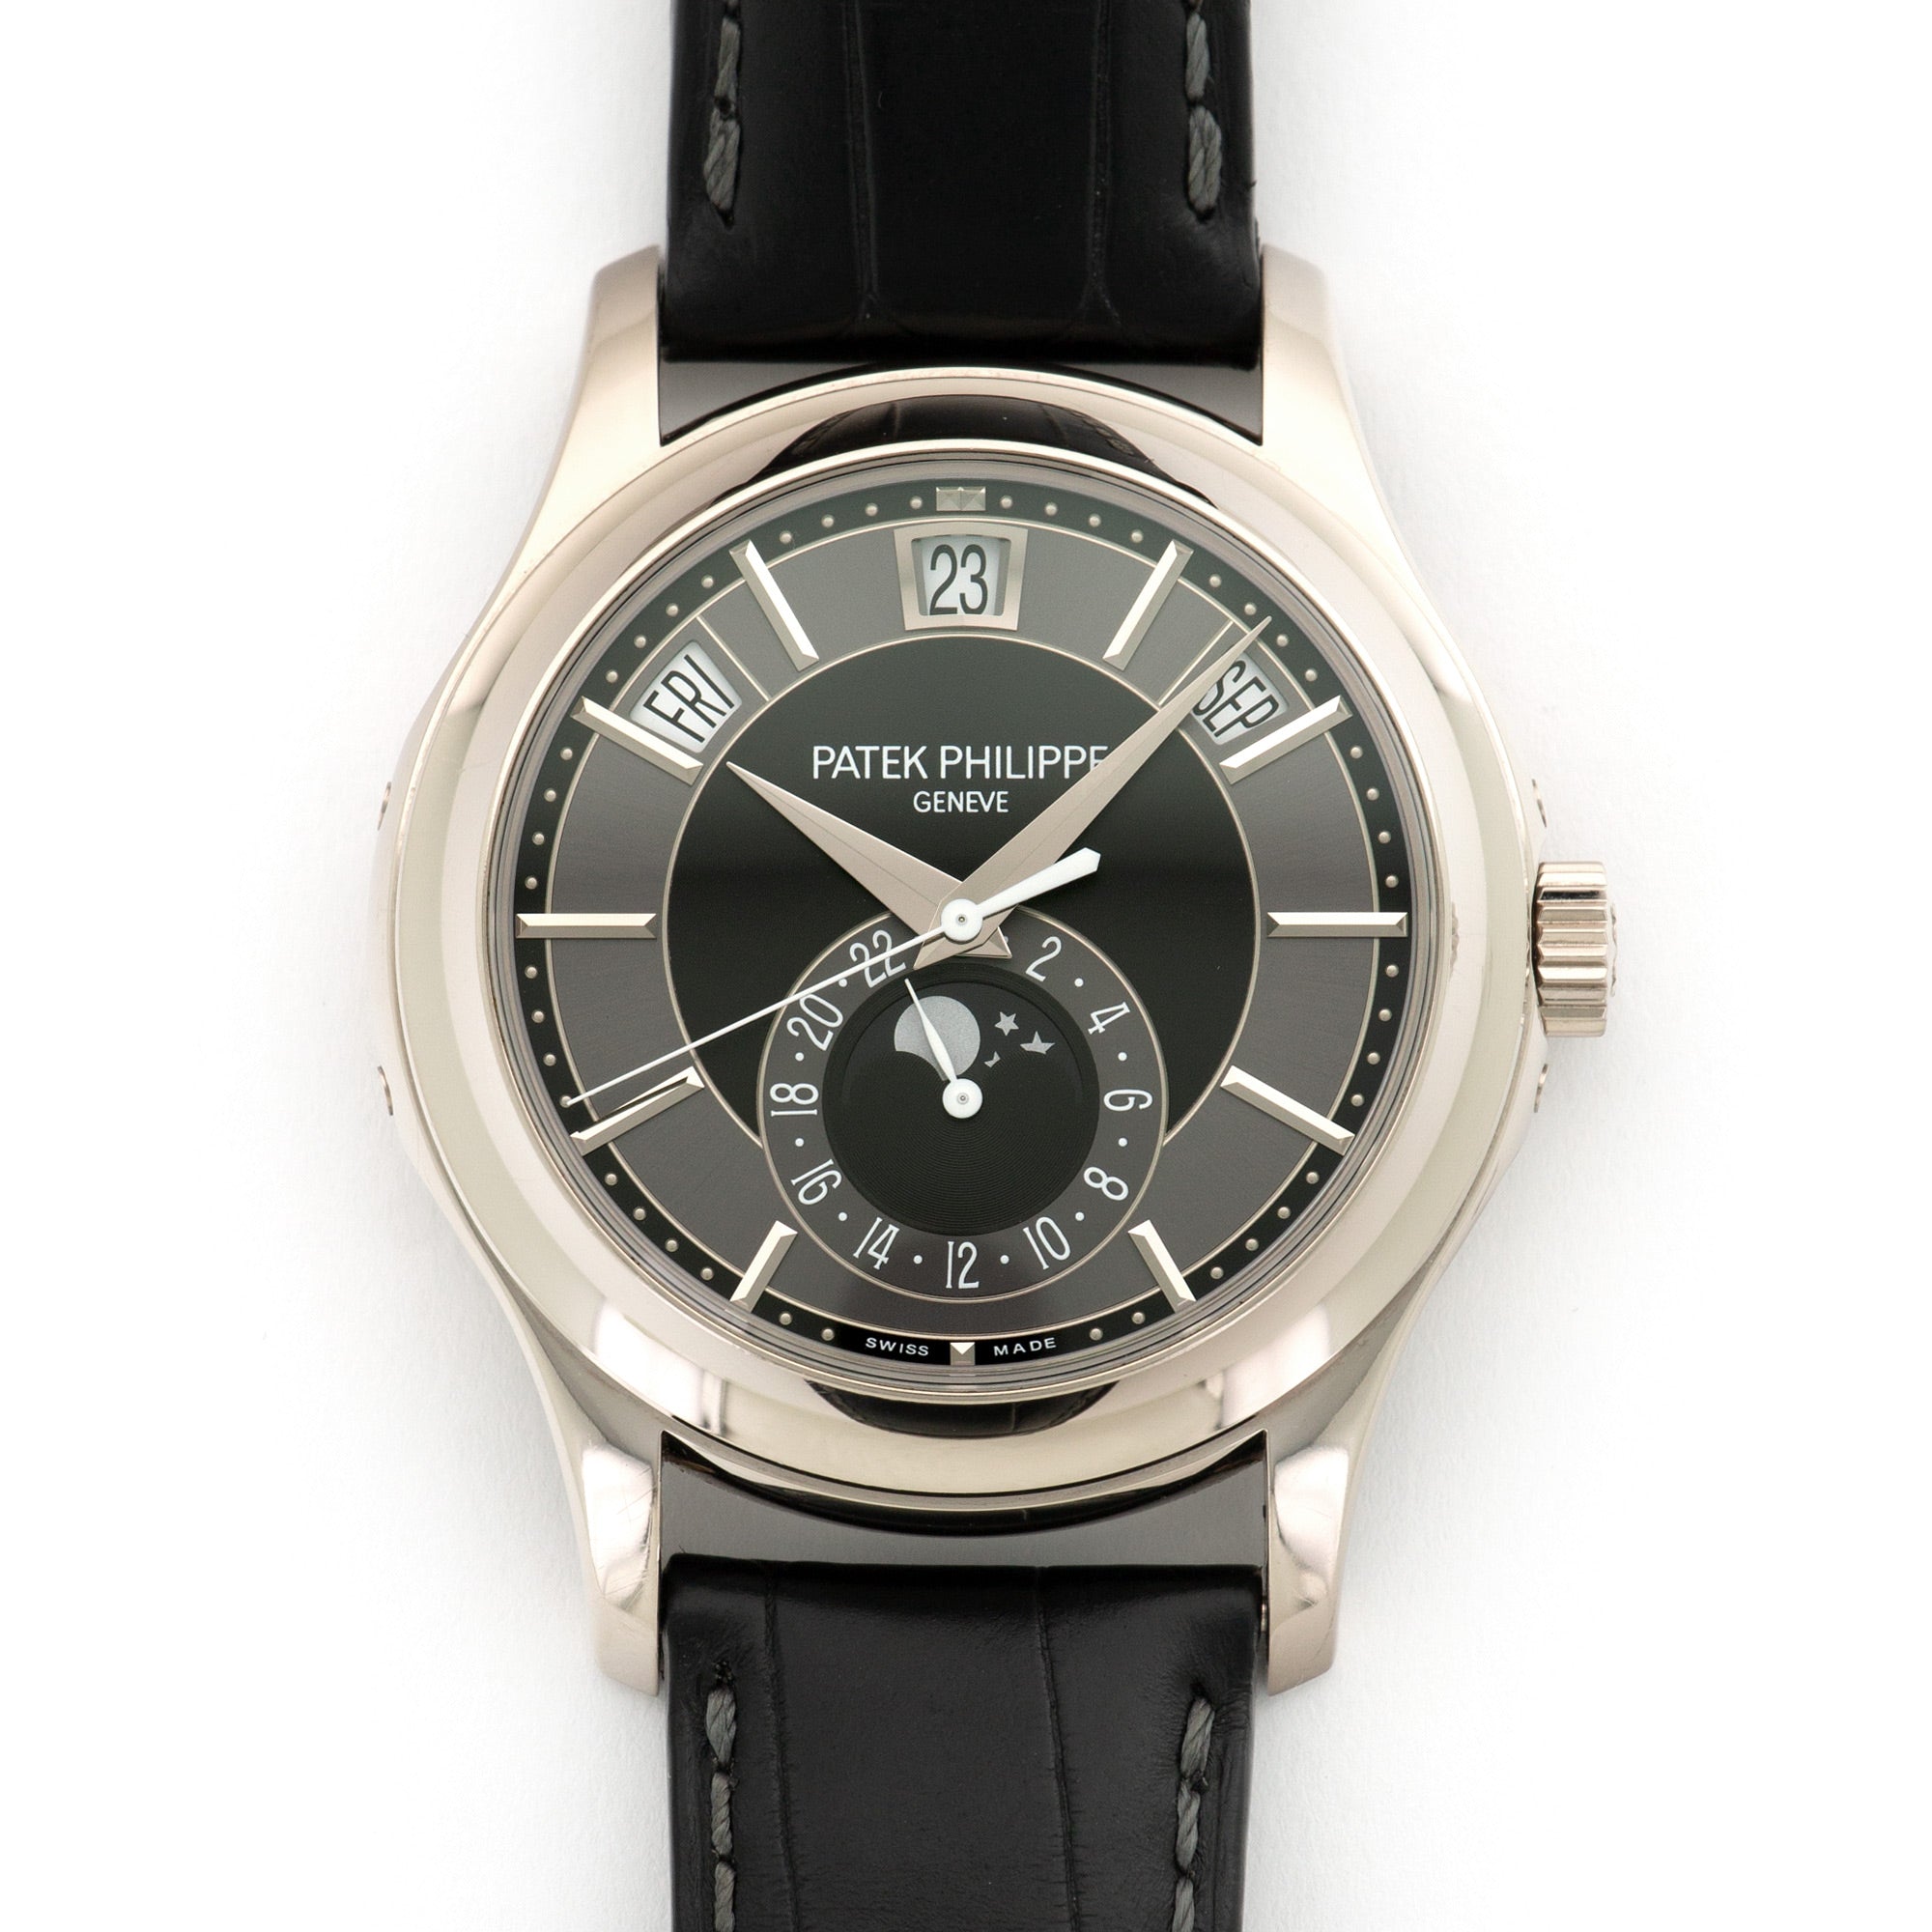 Patek Philippe - Patek Philippe White Gold Annual Calendar Moonphase Watch Ref. 5205 - The Keystone Watches